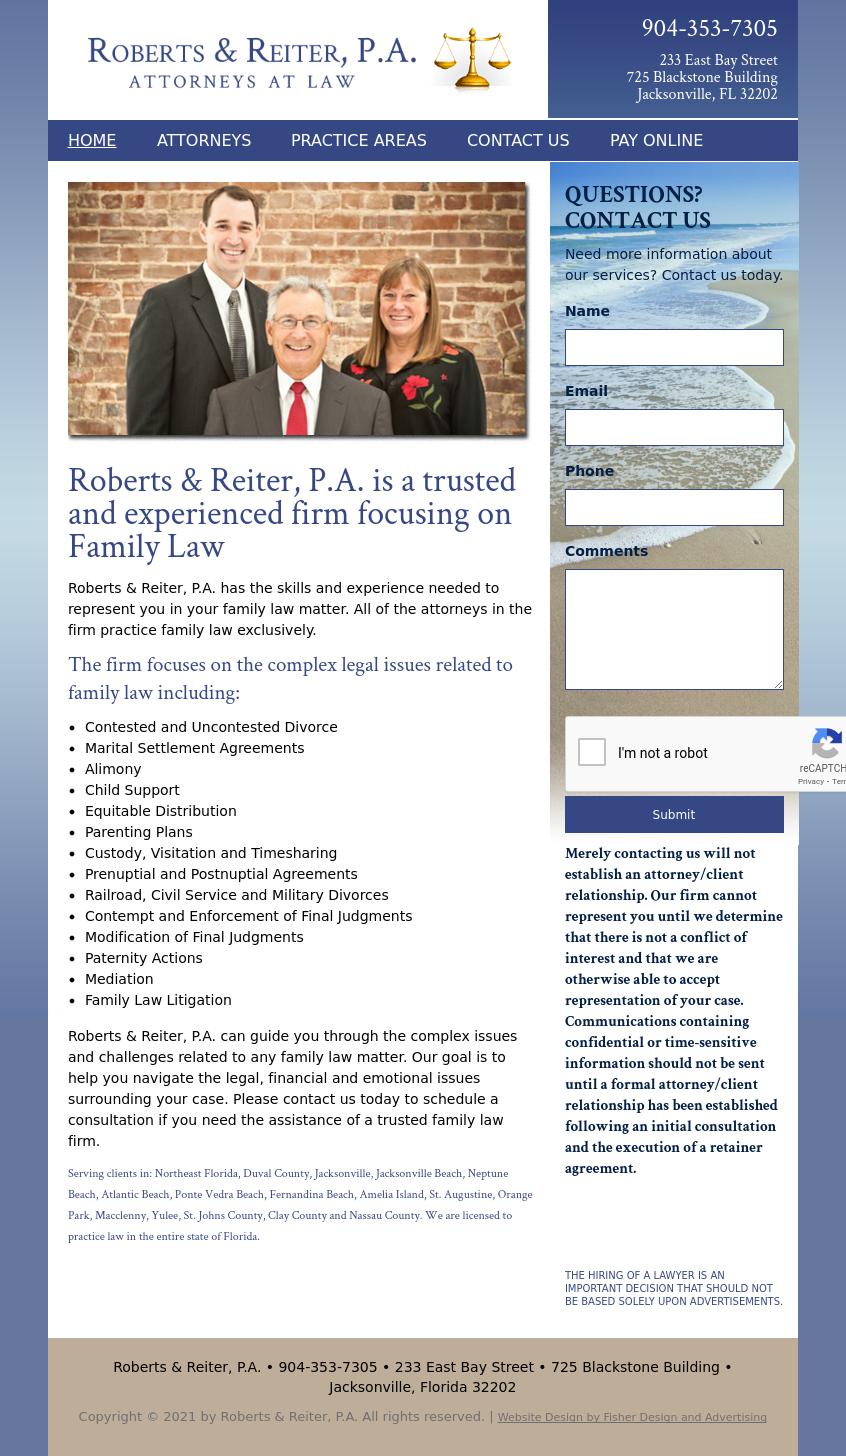 Roberts & Reiter PA - Jacksonville FL Lawyers